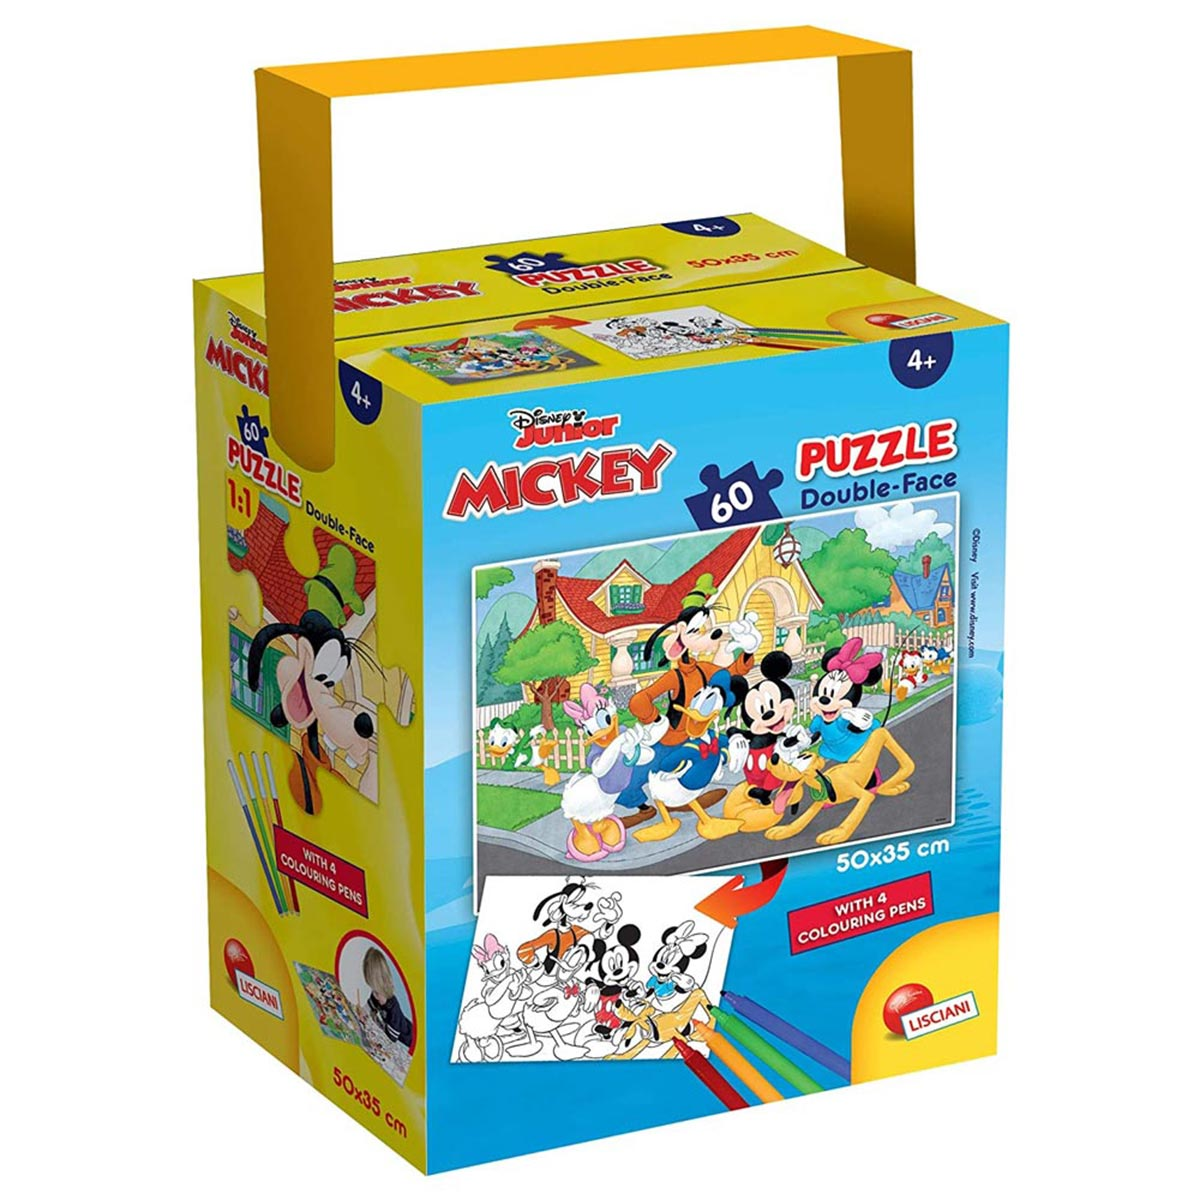 MICKEY MOUSE Ausmal-Puzzle in Teile Tragebox Lisciani von 60 Puzzle